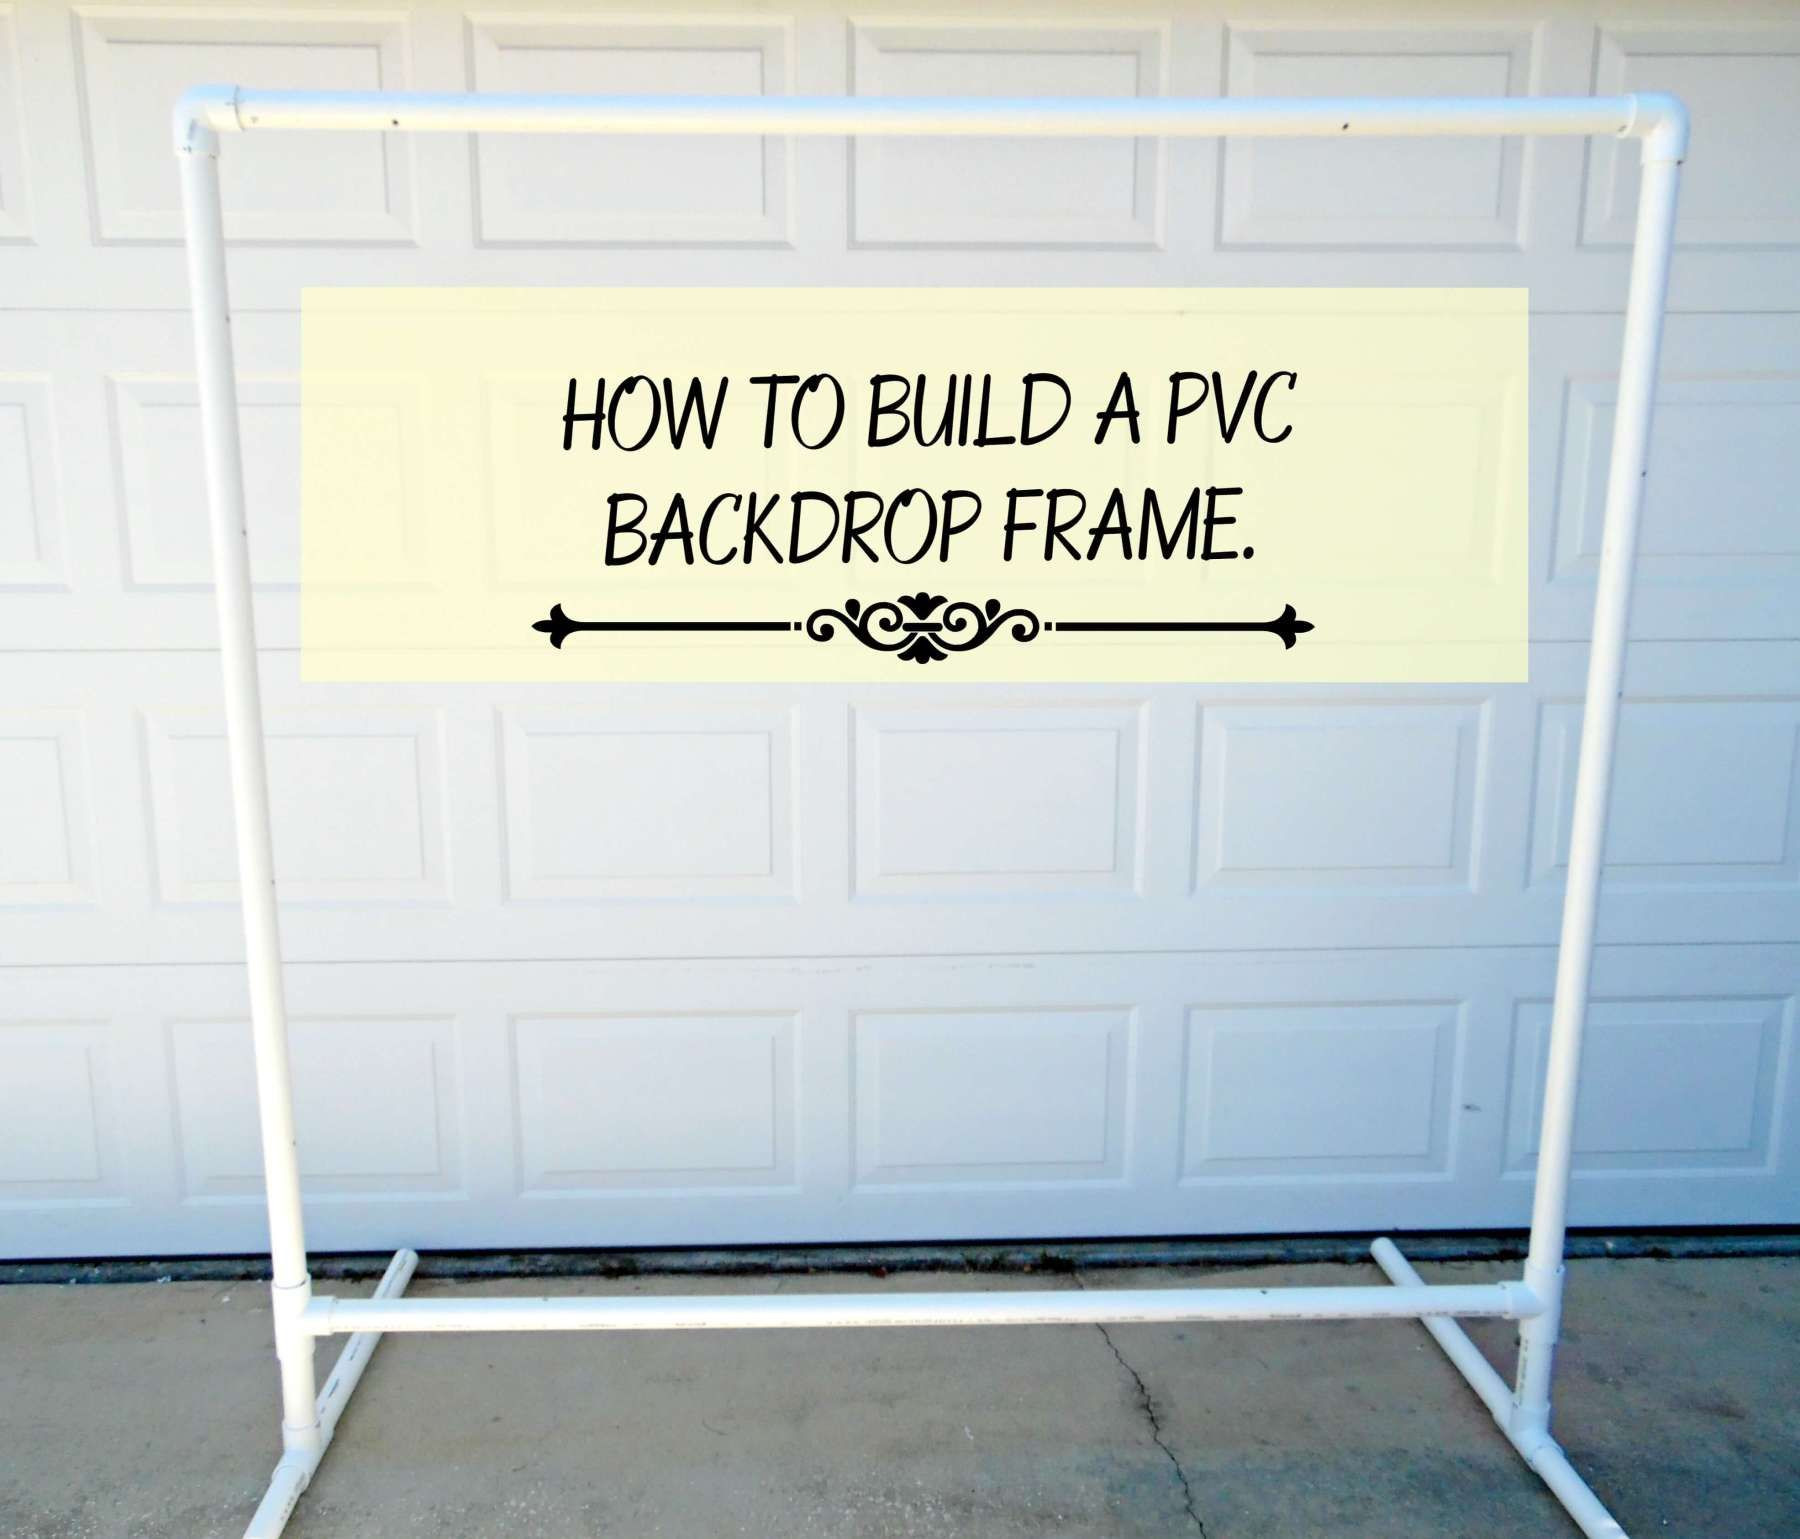 DIY Wedding Backdrops Using Pvc Piping
 Freestanding DIY PVC Backdrop How to Hang Your Paper